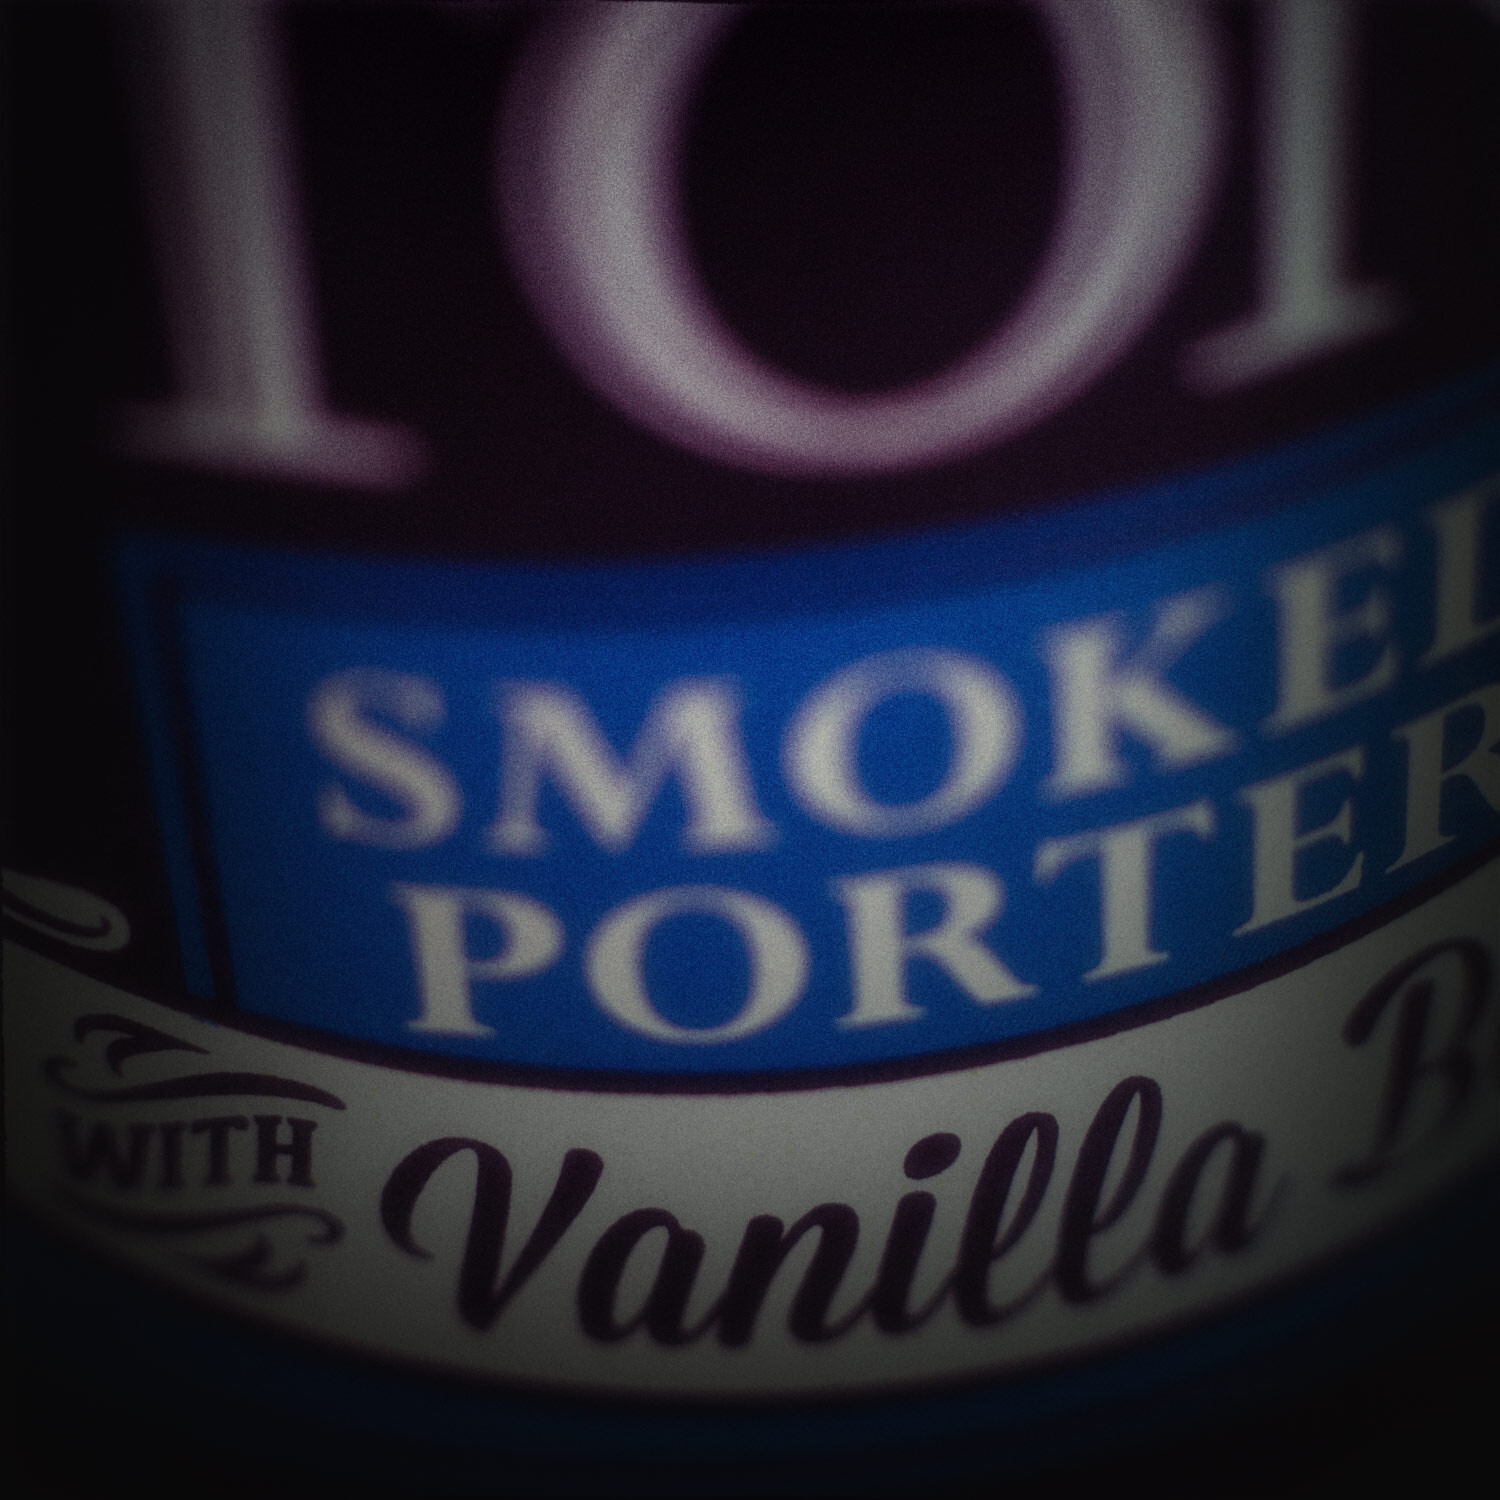 Stone Smoked Porter w/Vanilla Bean close-up